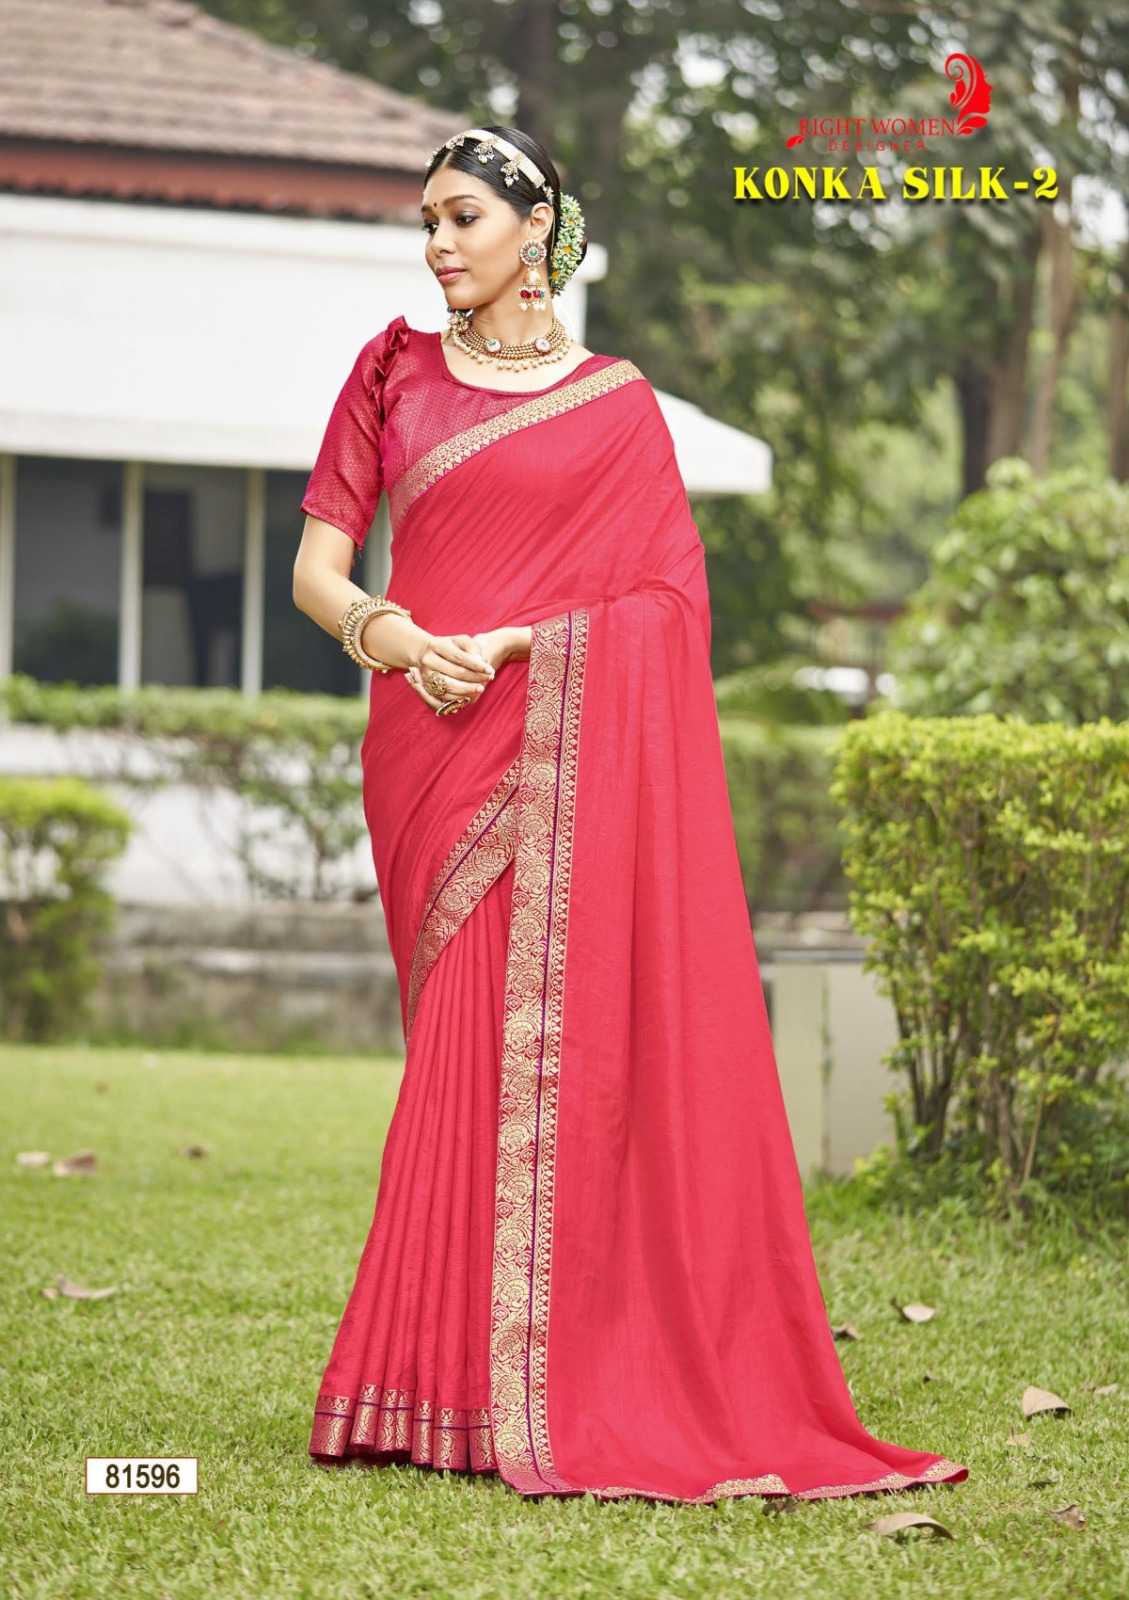 konka silk vol 2 by right women designer 81591-81594 regular wear vichitra saree 